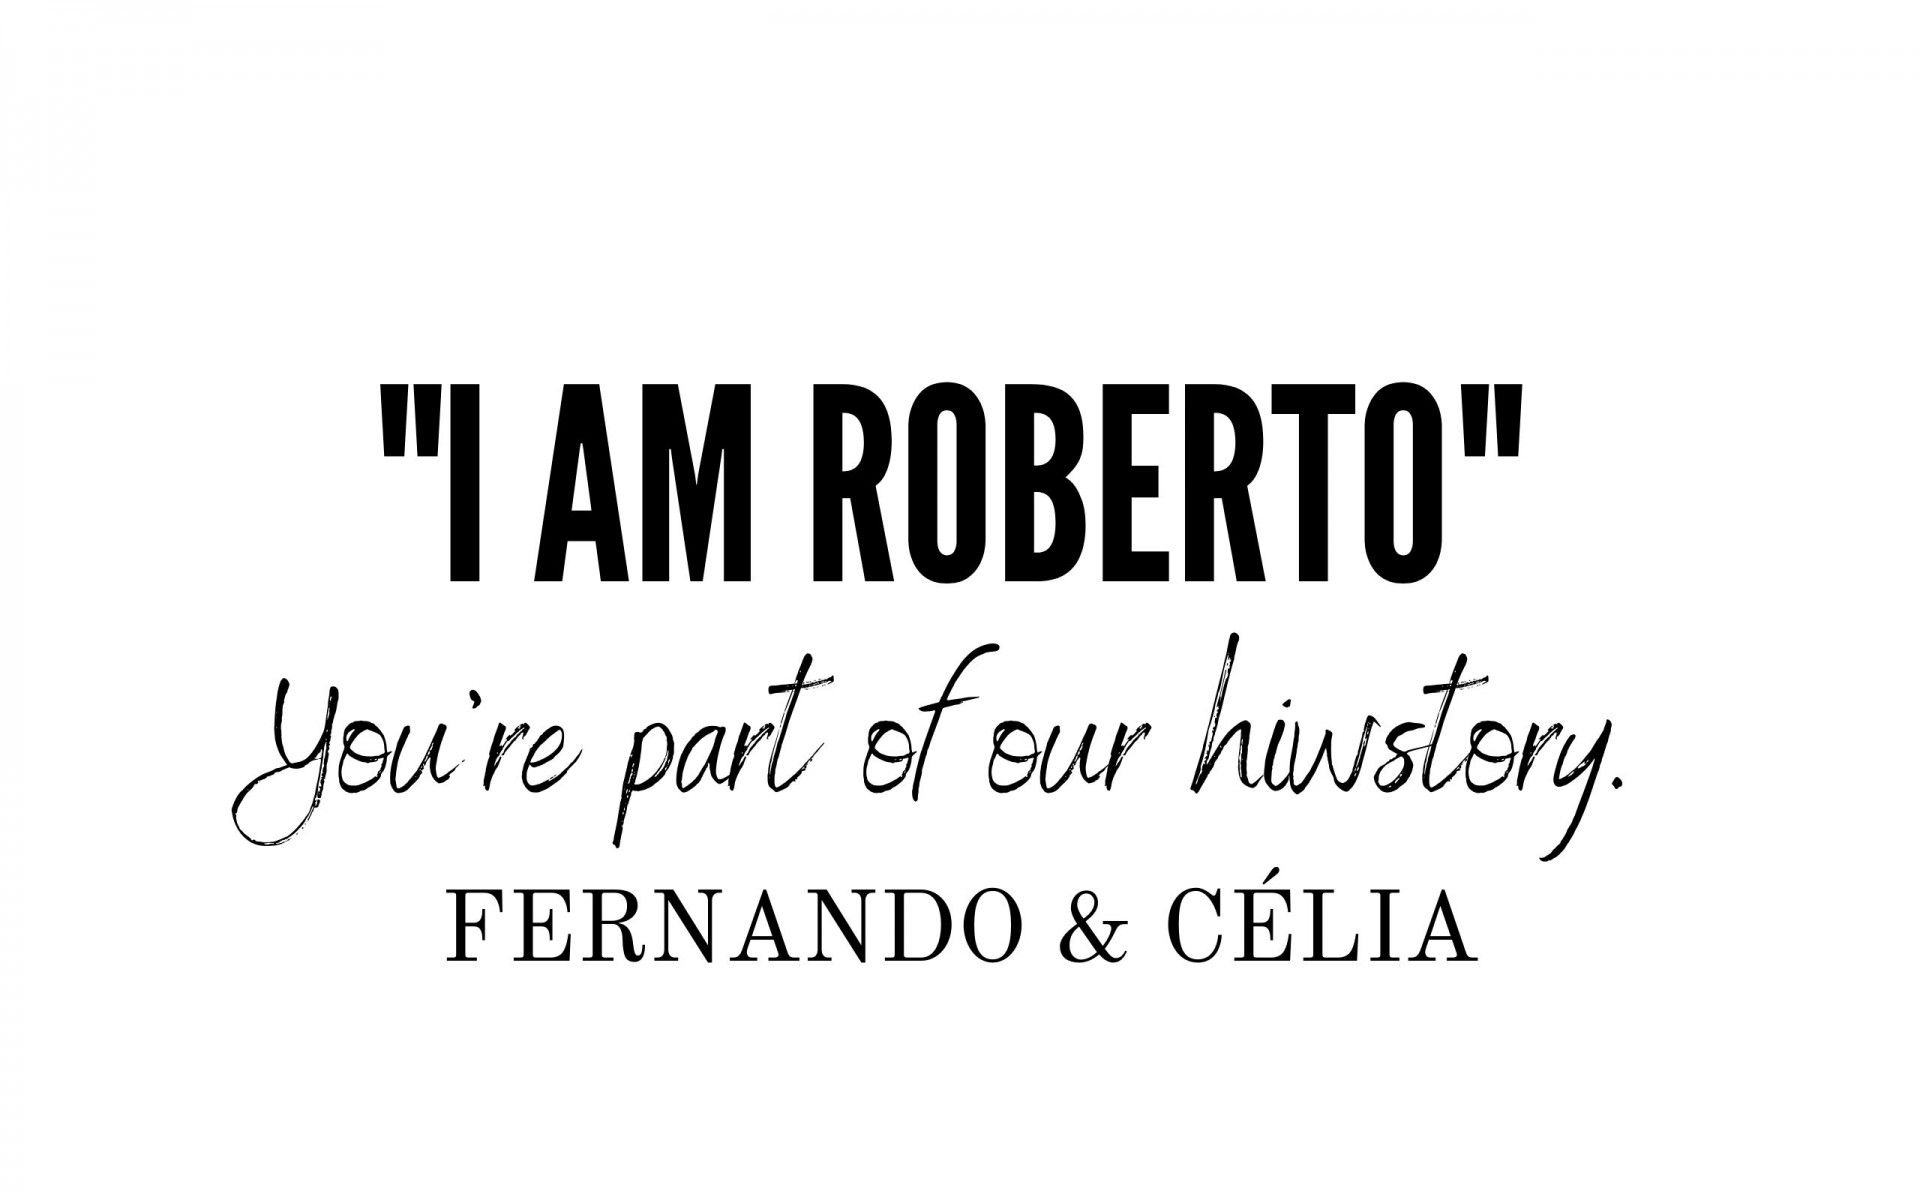 You are part of our history - Fernando & Célia